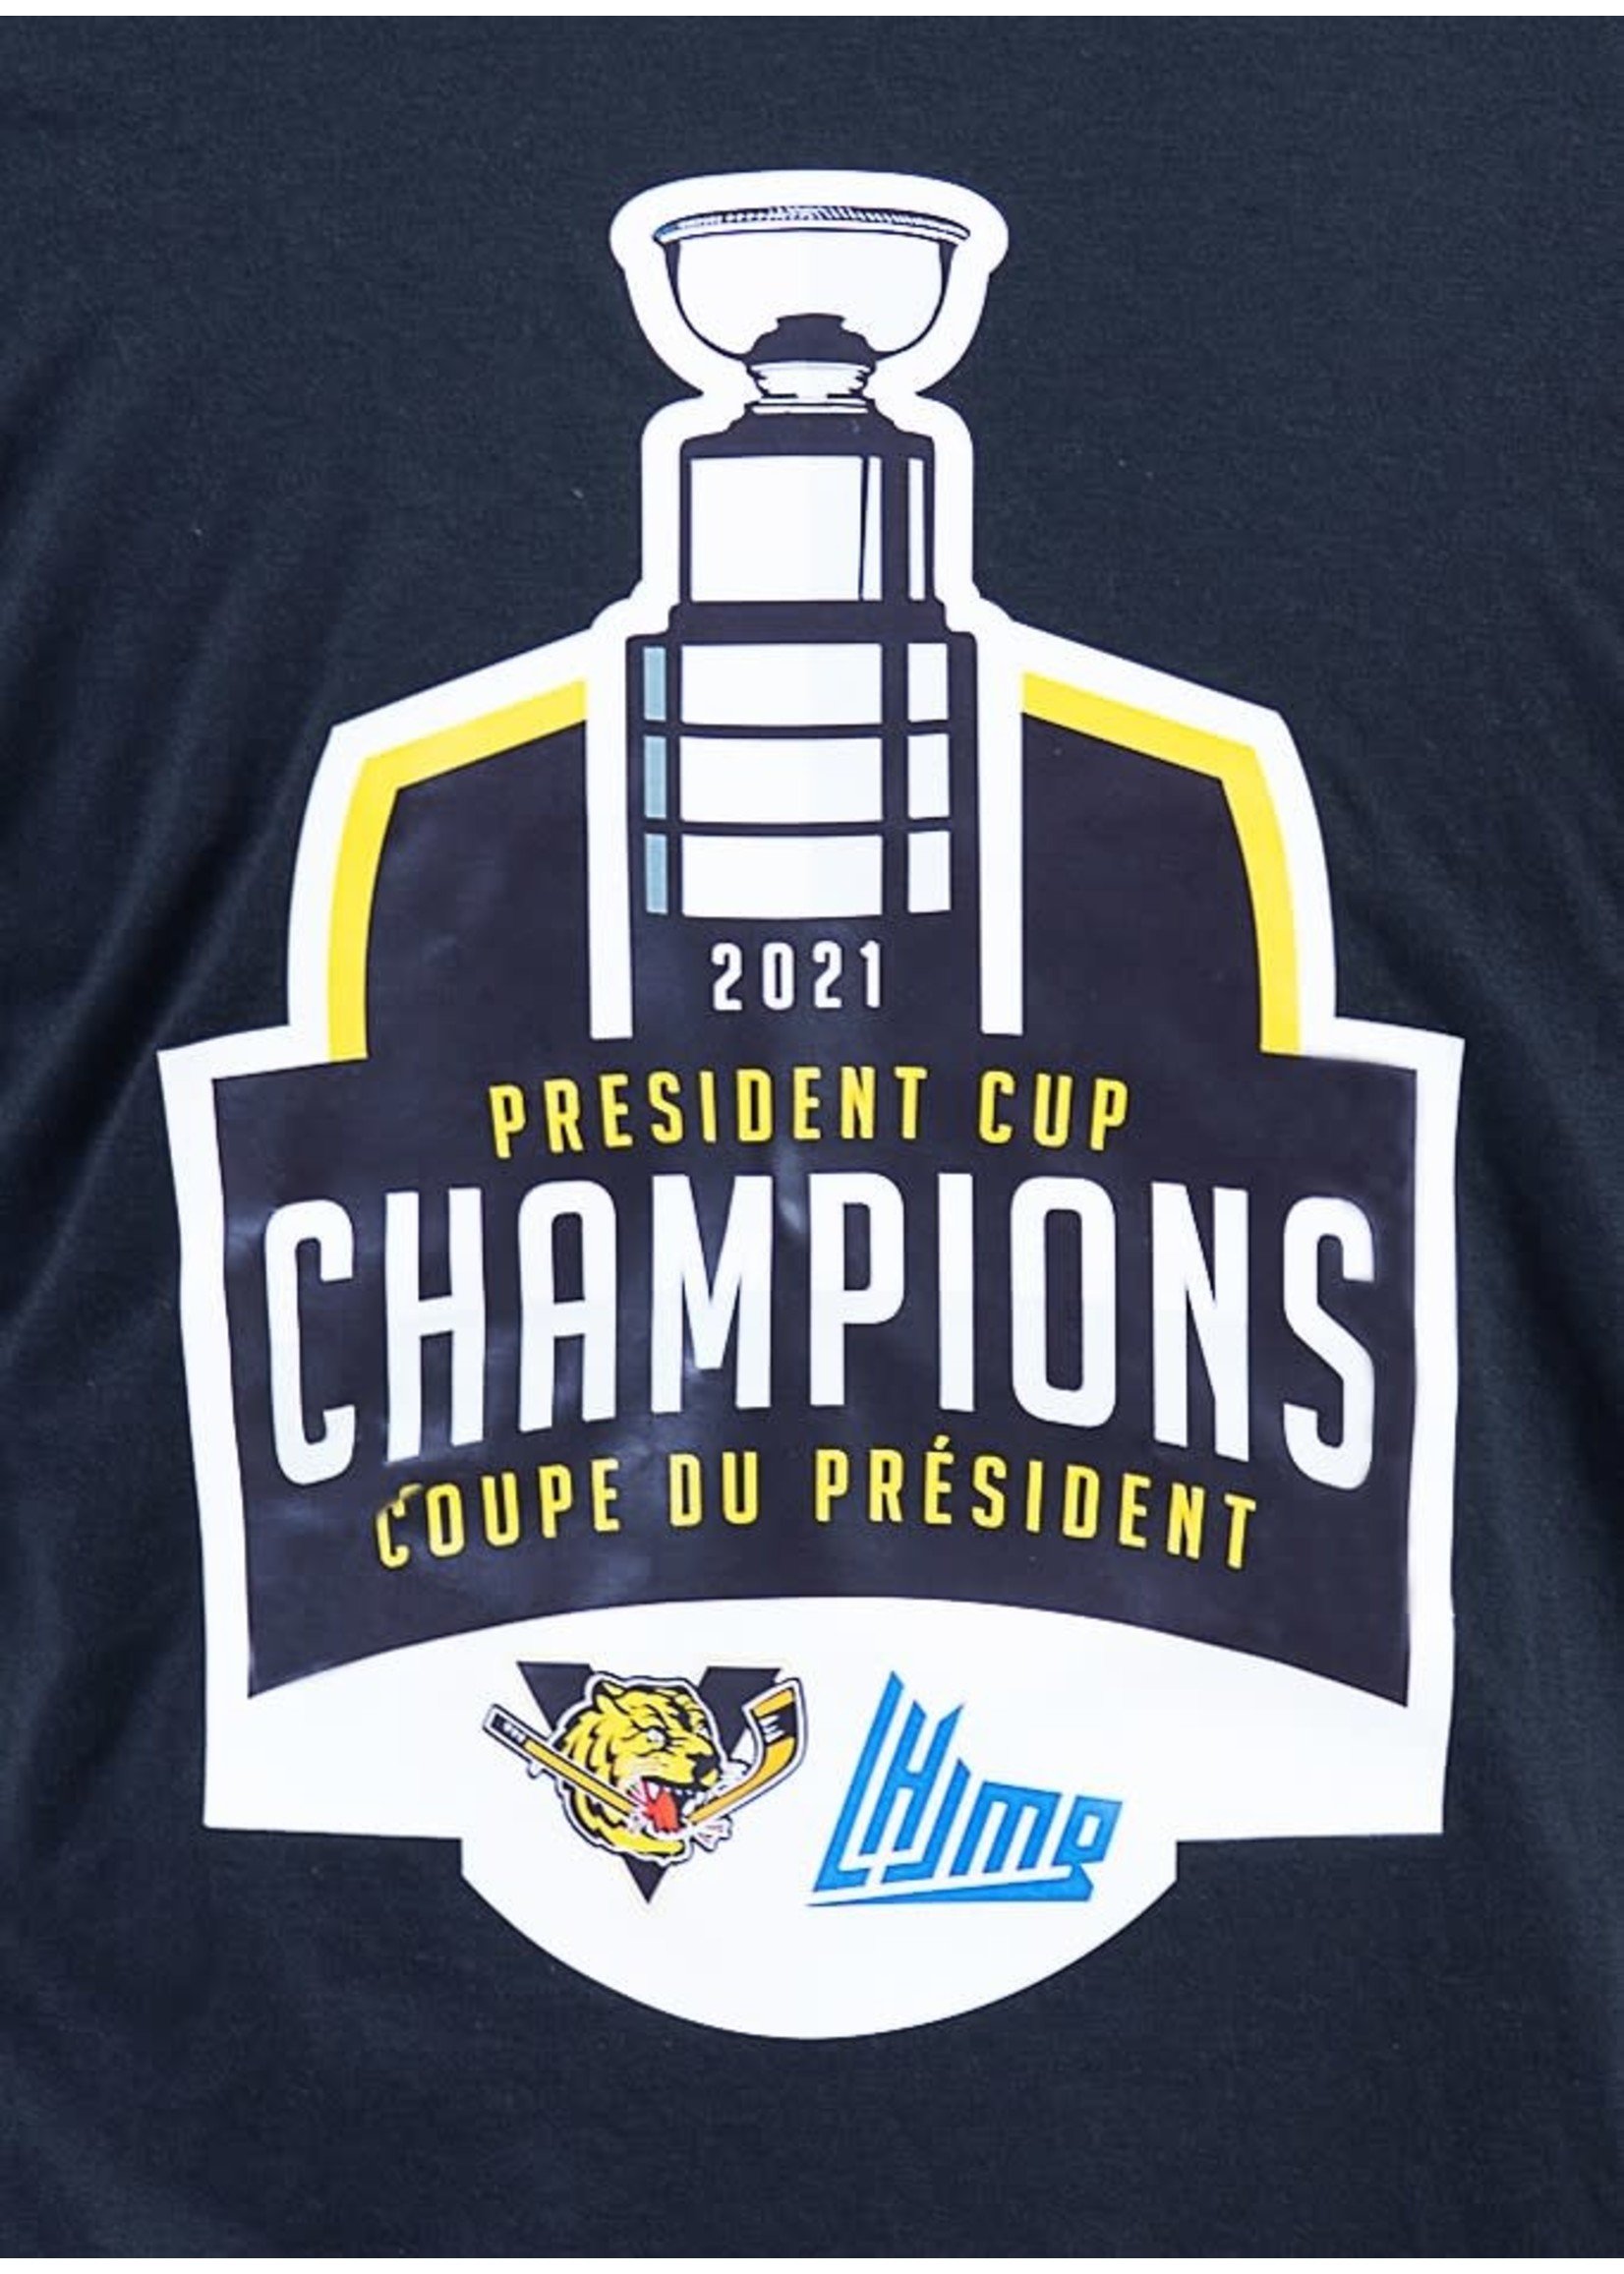 T-shirt champions 2021